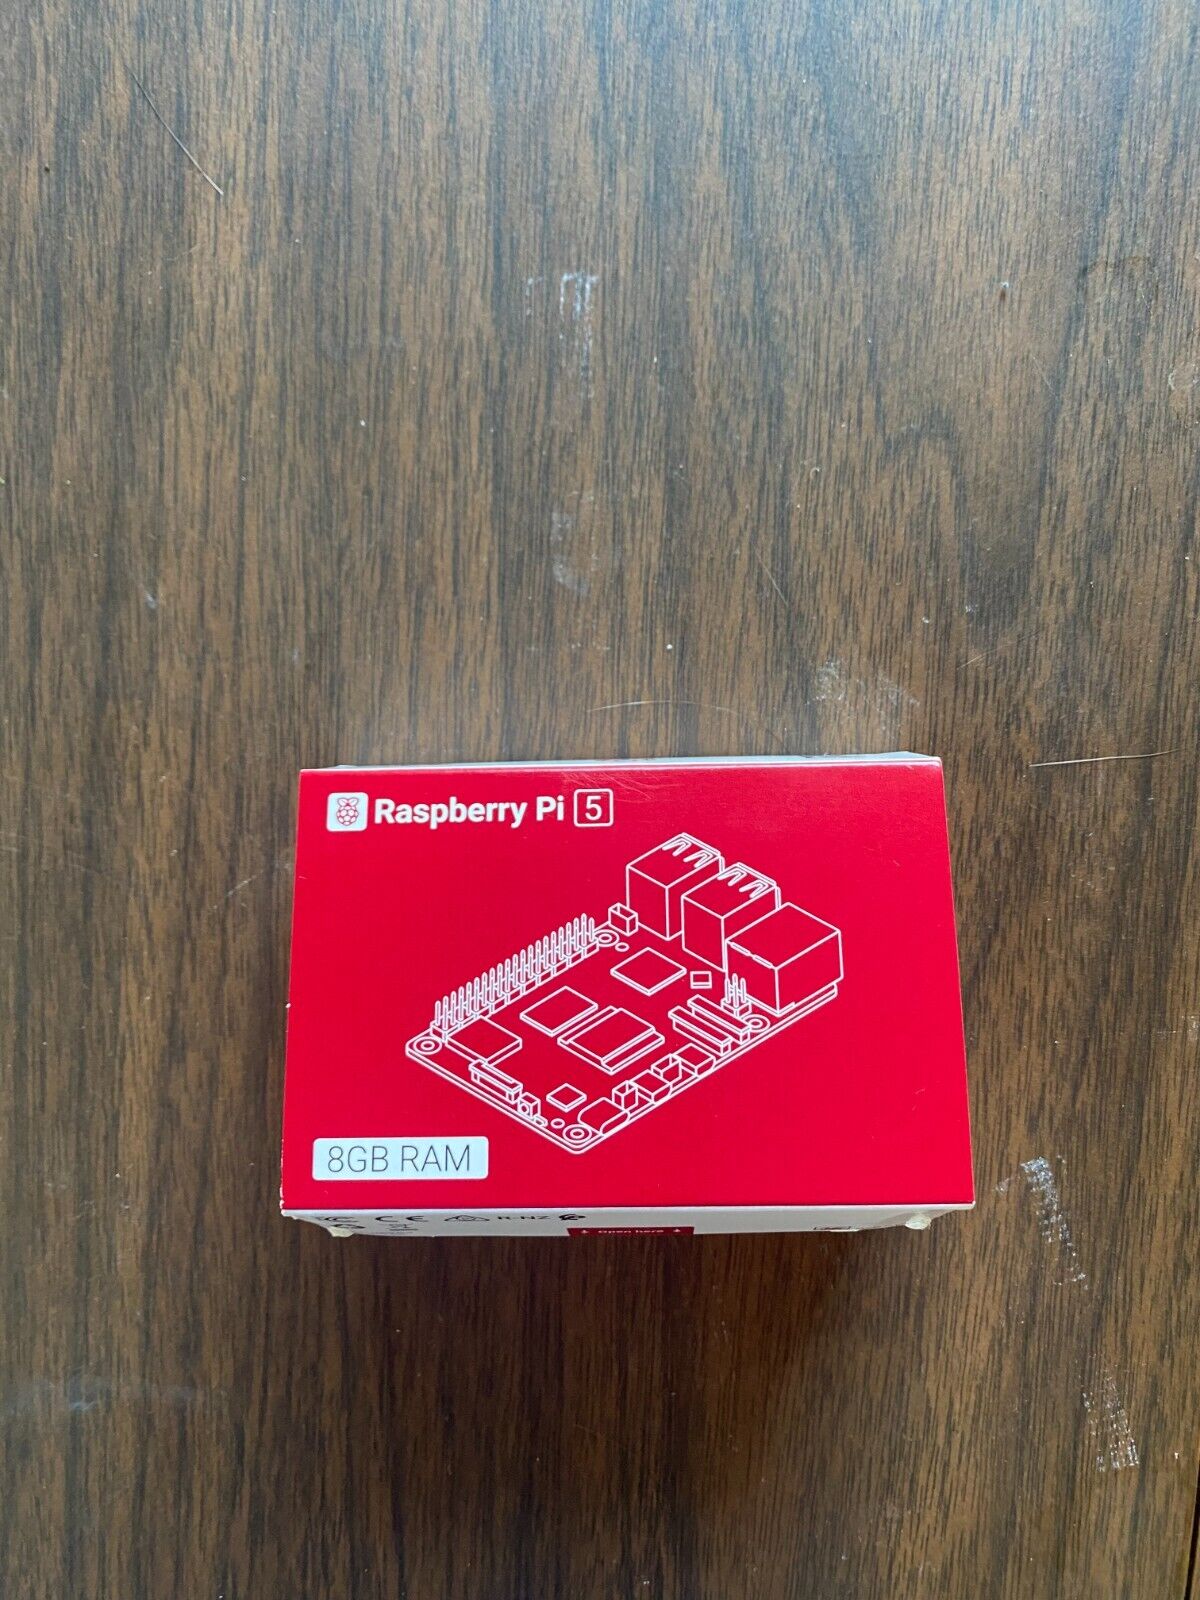 Raspberry Pi 5 8GB RAM - Brand New - Open Box